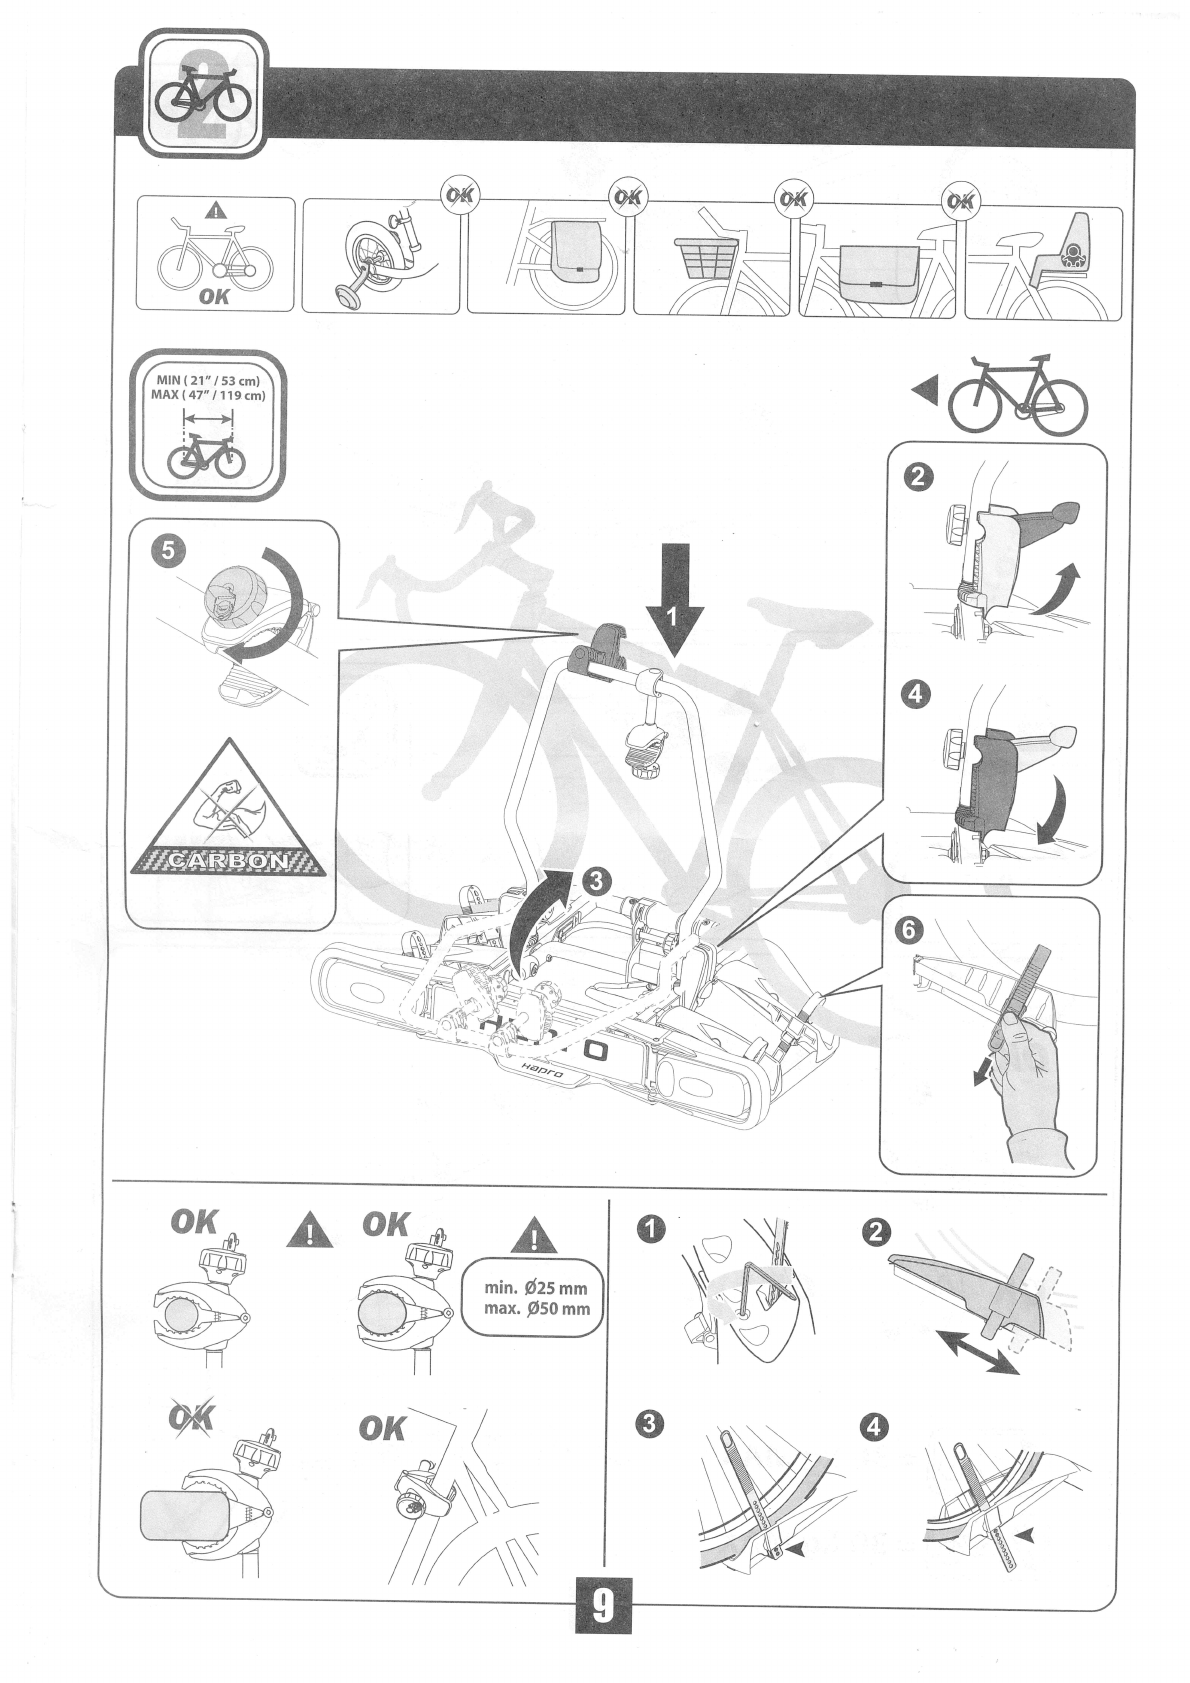 Wiskundig George Stevenson Tijdig Manual Hapro Atlas 2 Premium E-bike (page 9 of 17) (Dutch)